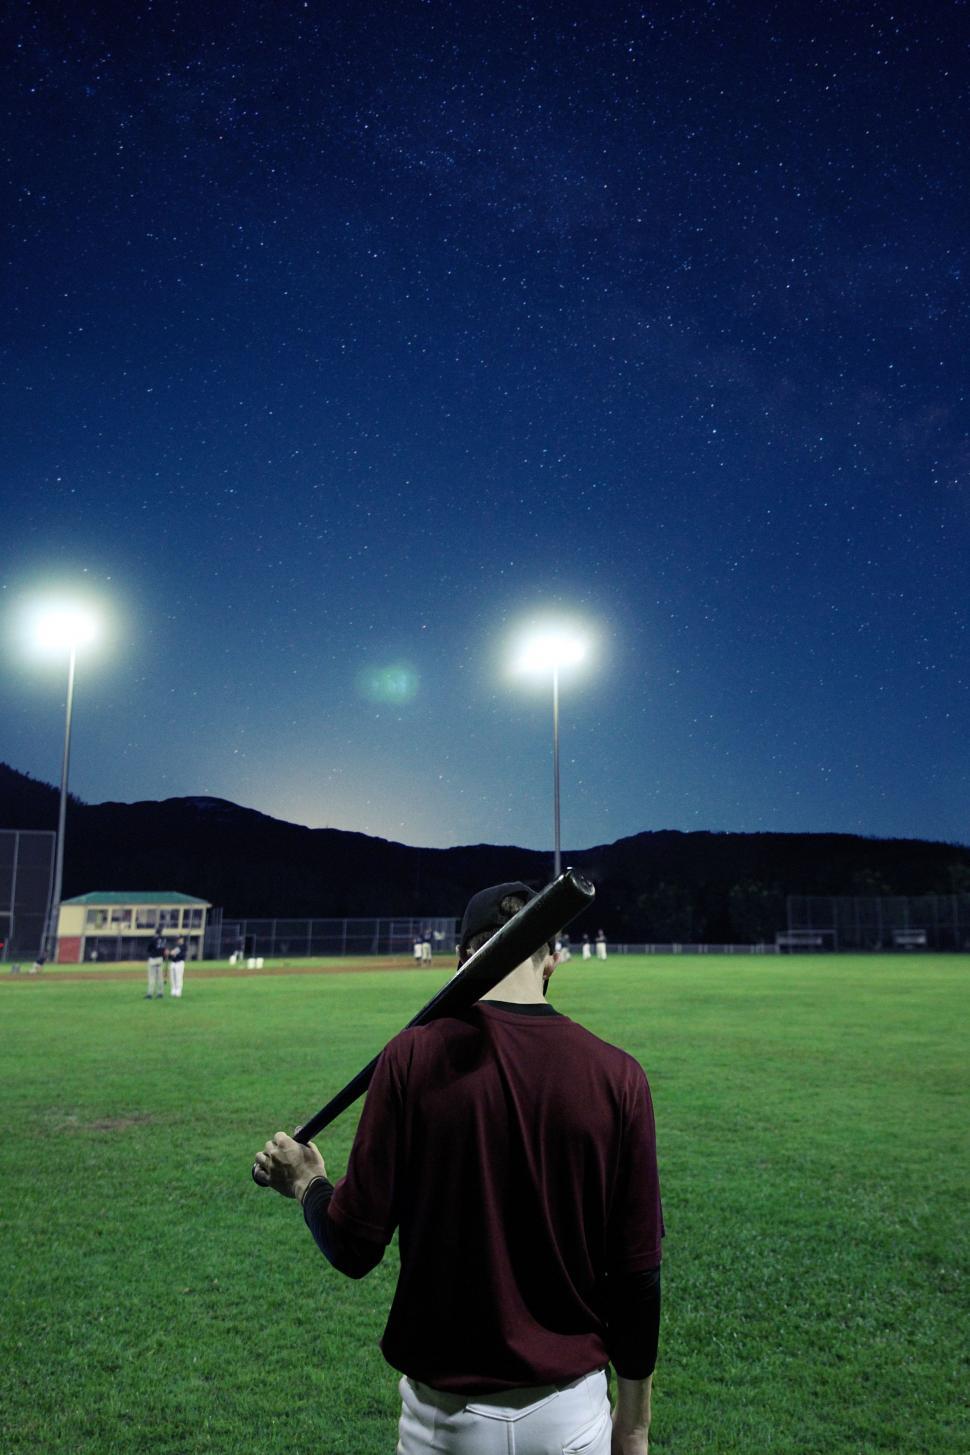 Free Image of Man Holding Baseball Bat in Field 